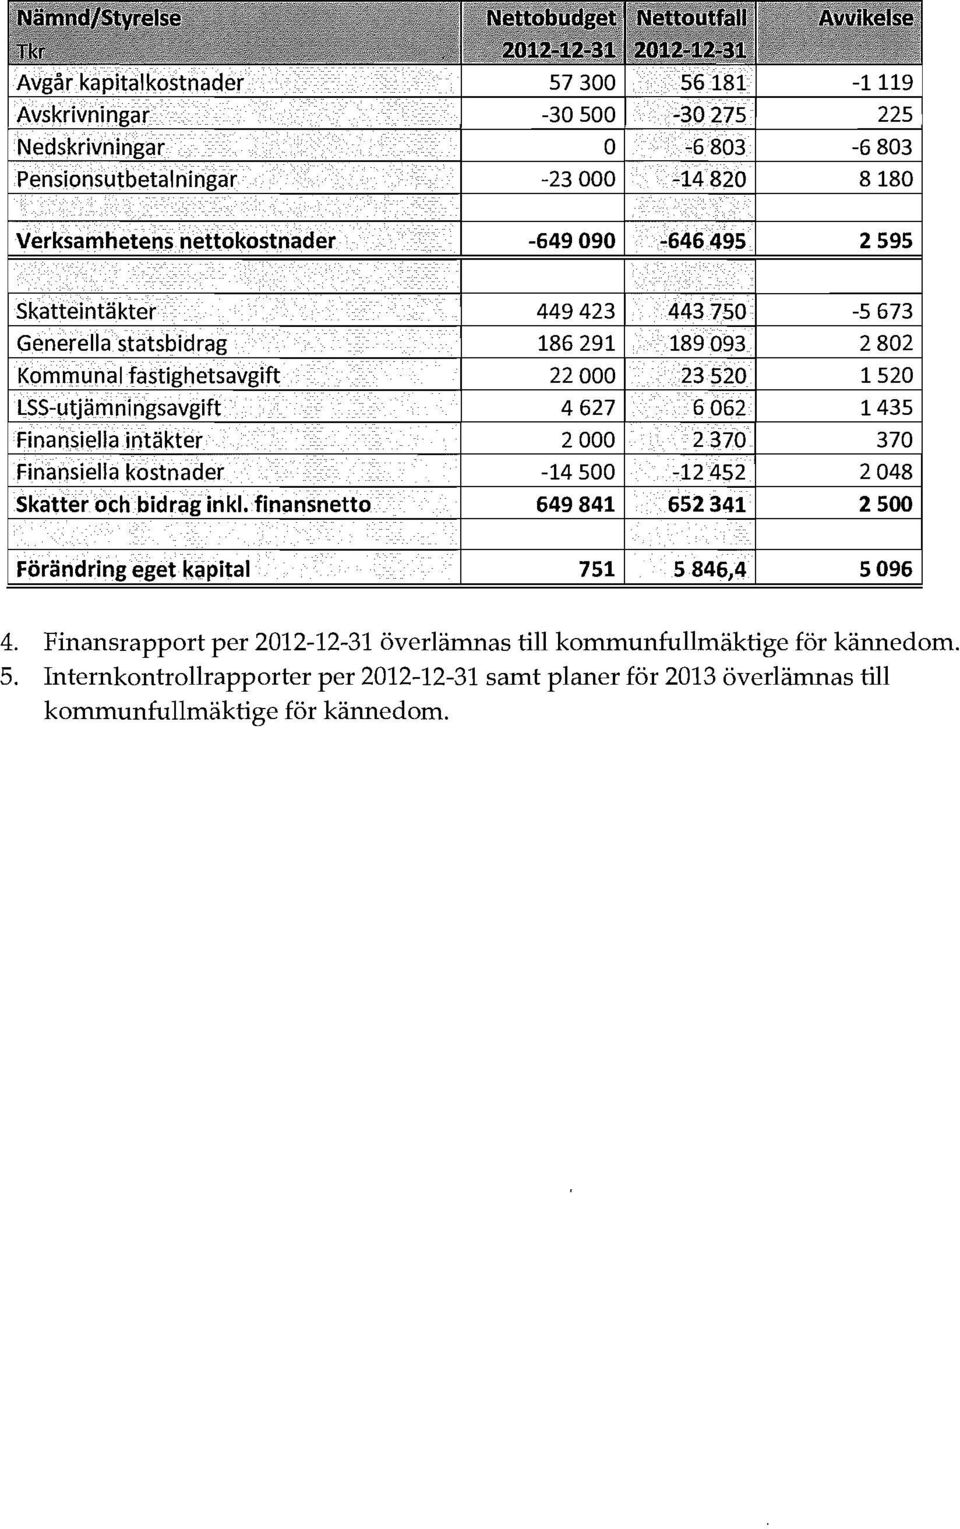 nternkontrollrapporter per 2012-12-31 samt